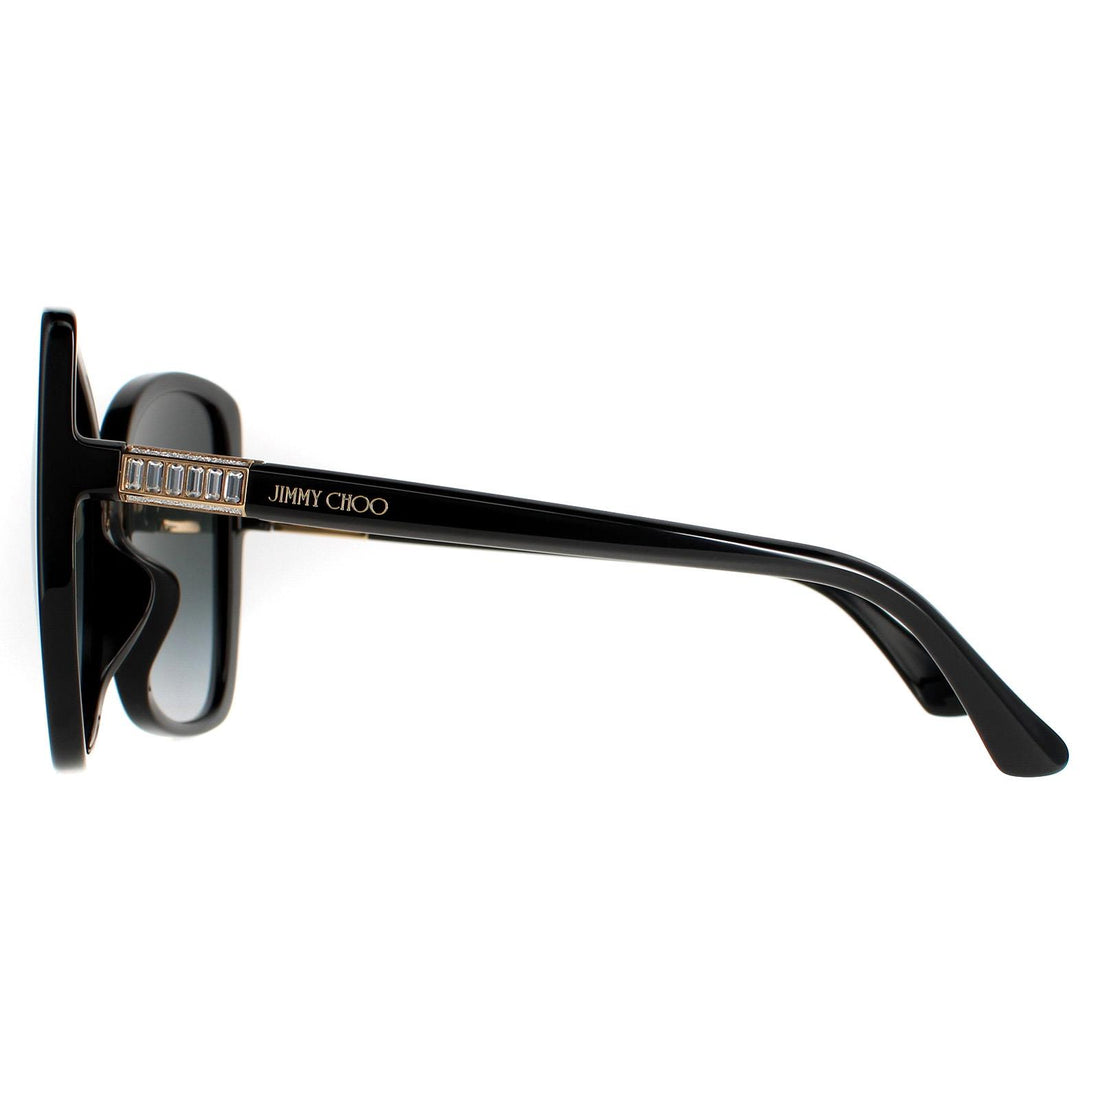 Jimmy Choo Sunglasses BECKY/F/S 807 9O Black Dark Grey Gradient